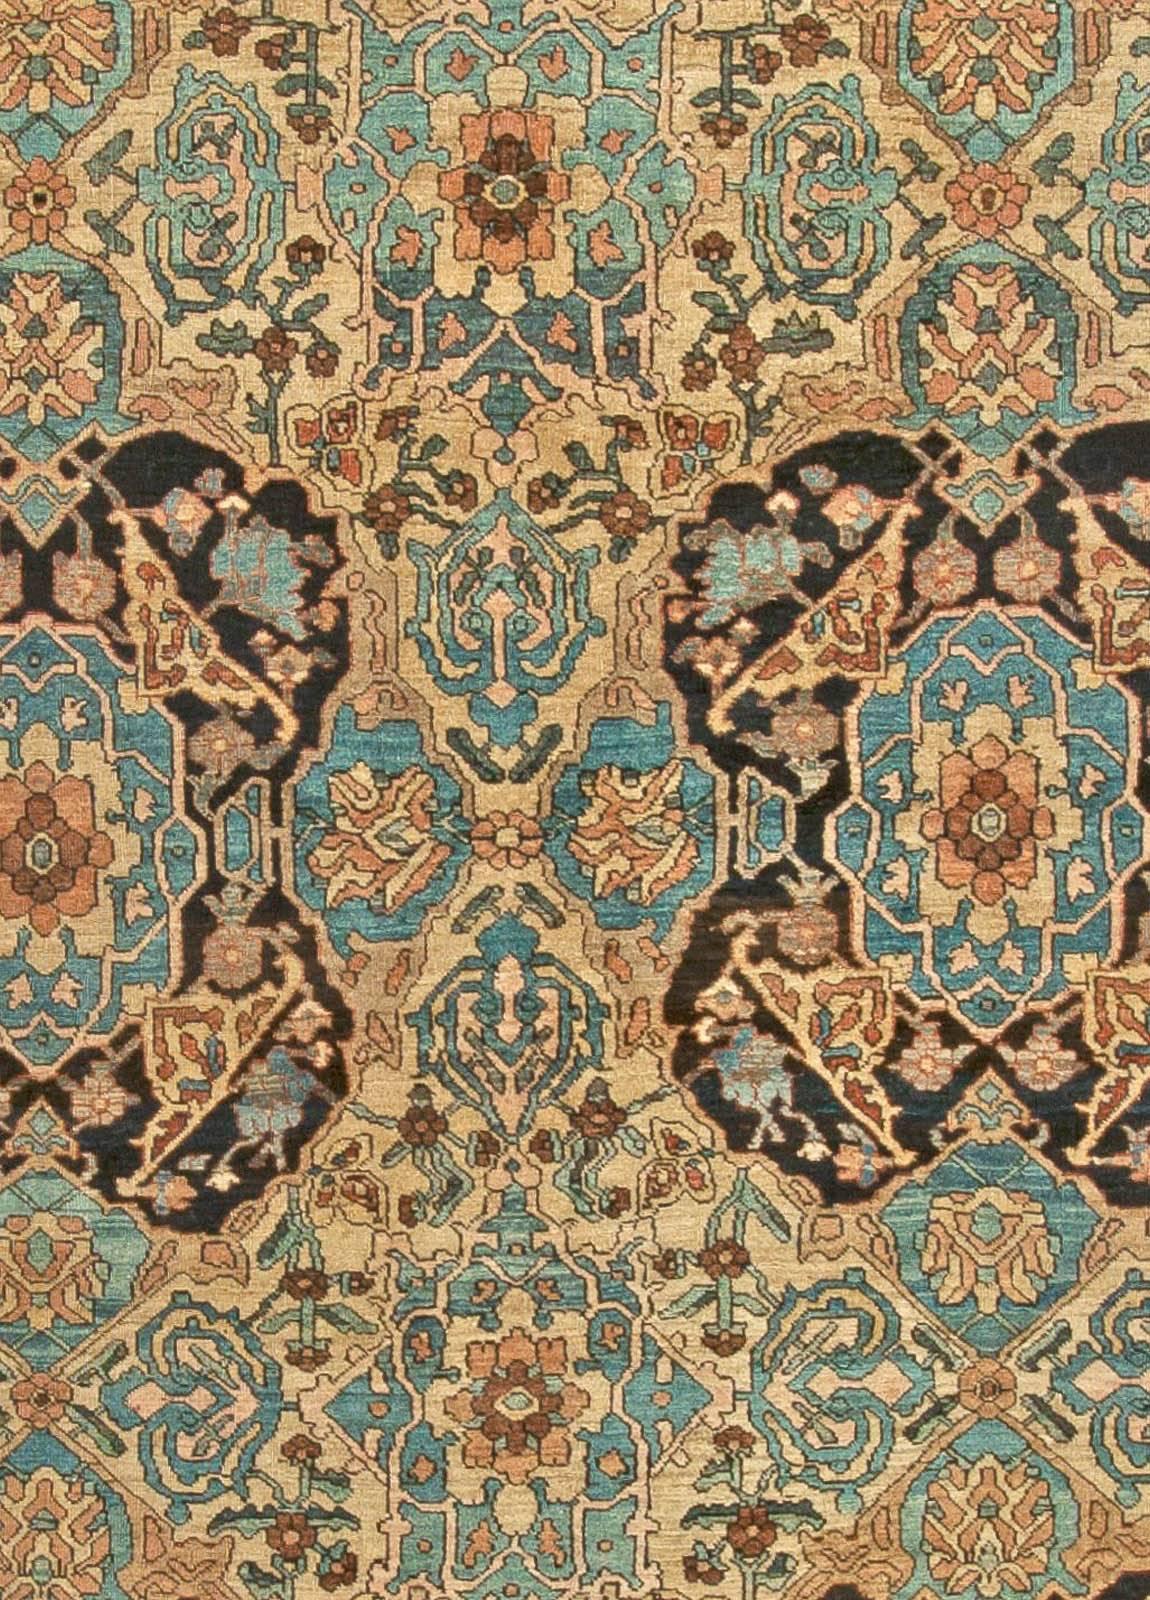 Large antique Persian Bakhtiari handmade wool carpet
Size: 14'2